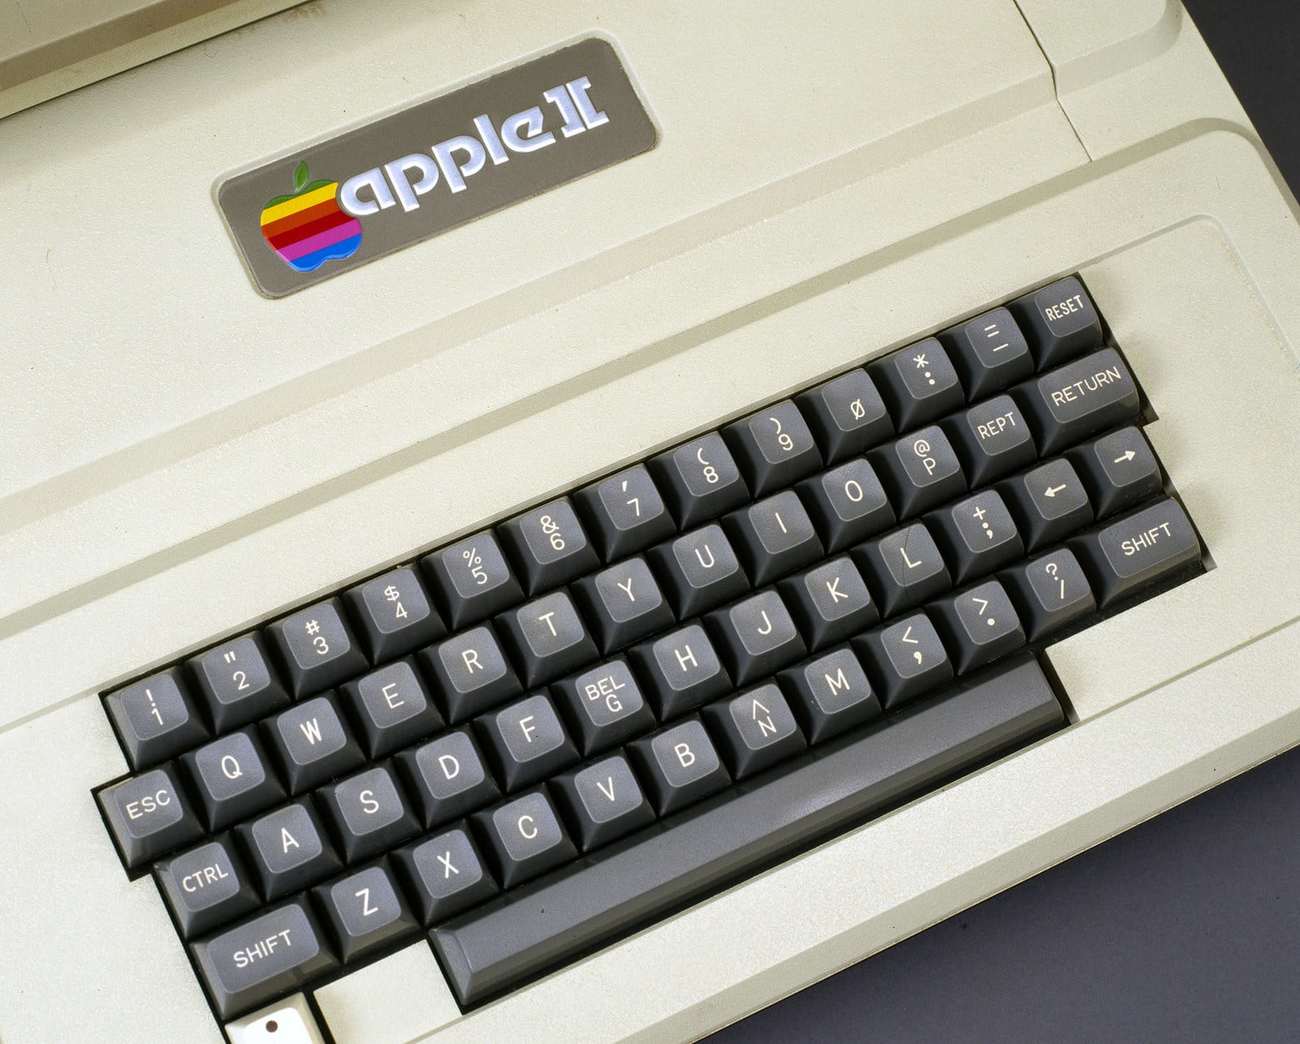 Apple II პირველი პერსონალური კომპიუტერი იყო, რომელიც ფართო მასებისთვის შეიქმნა.